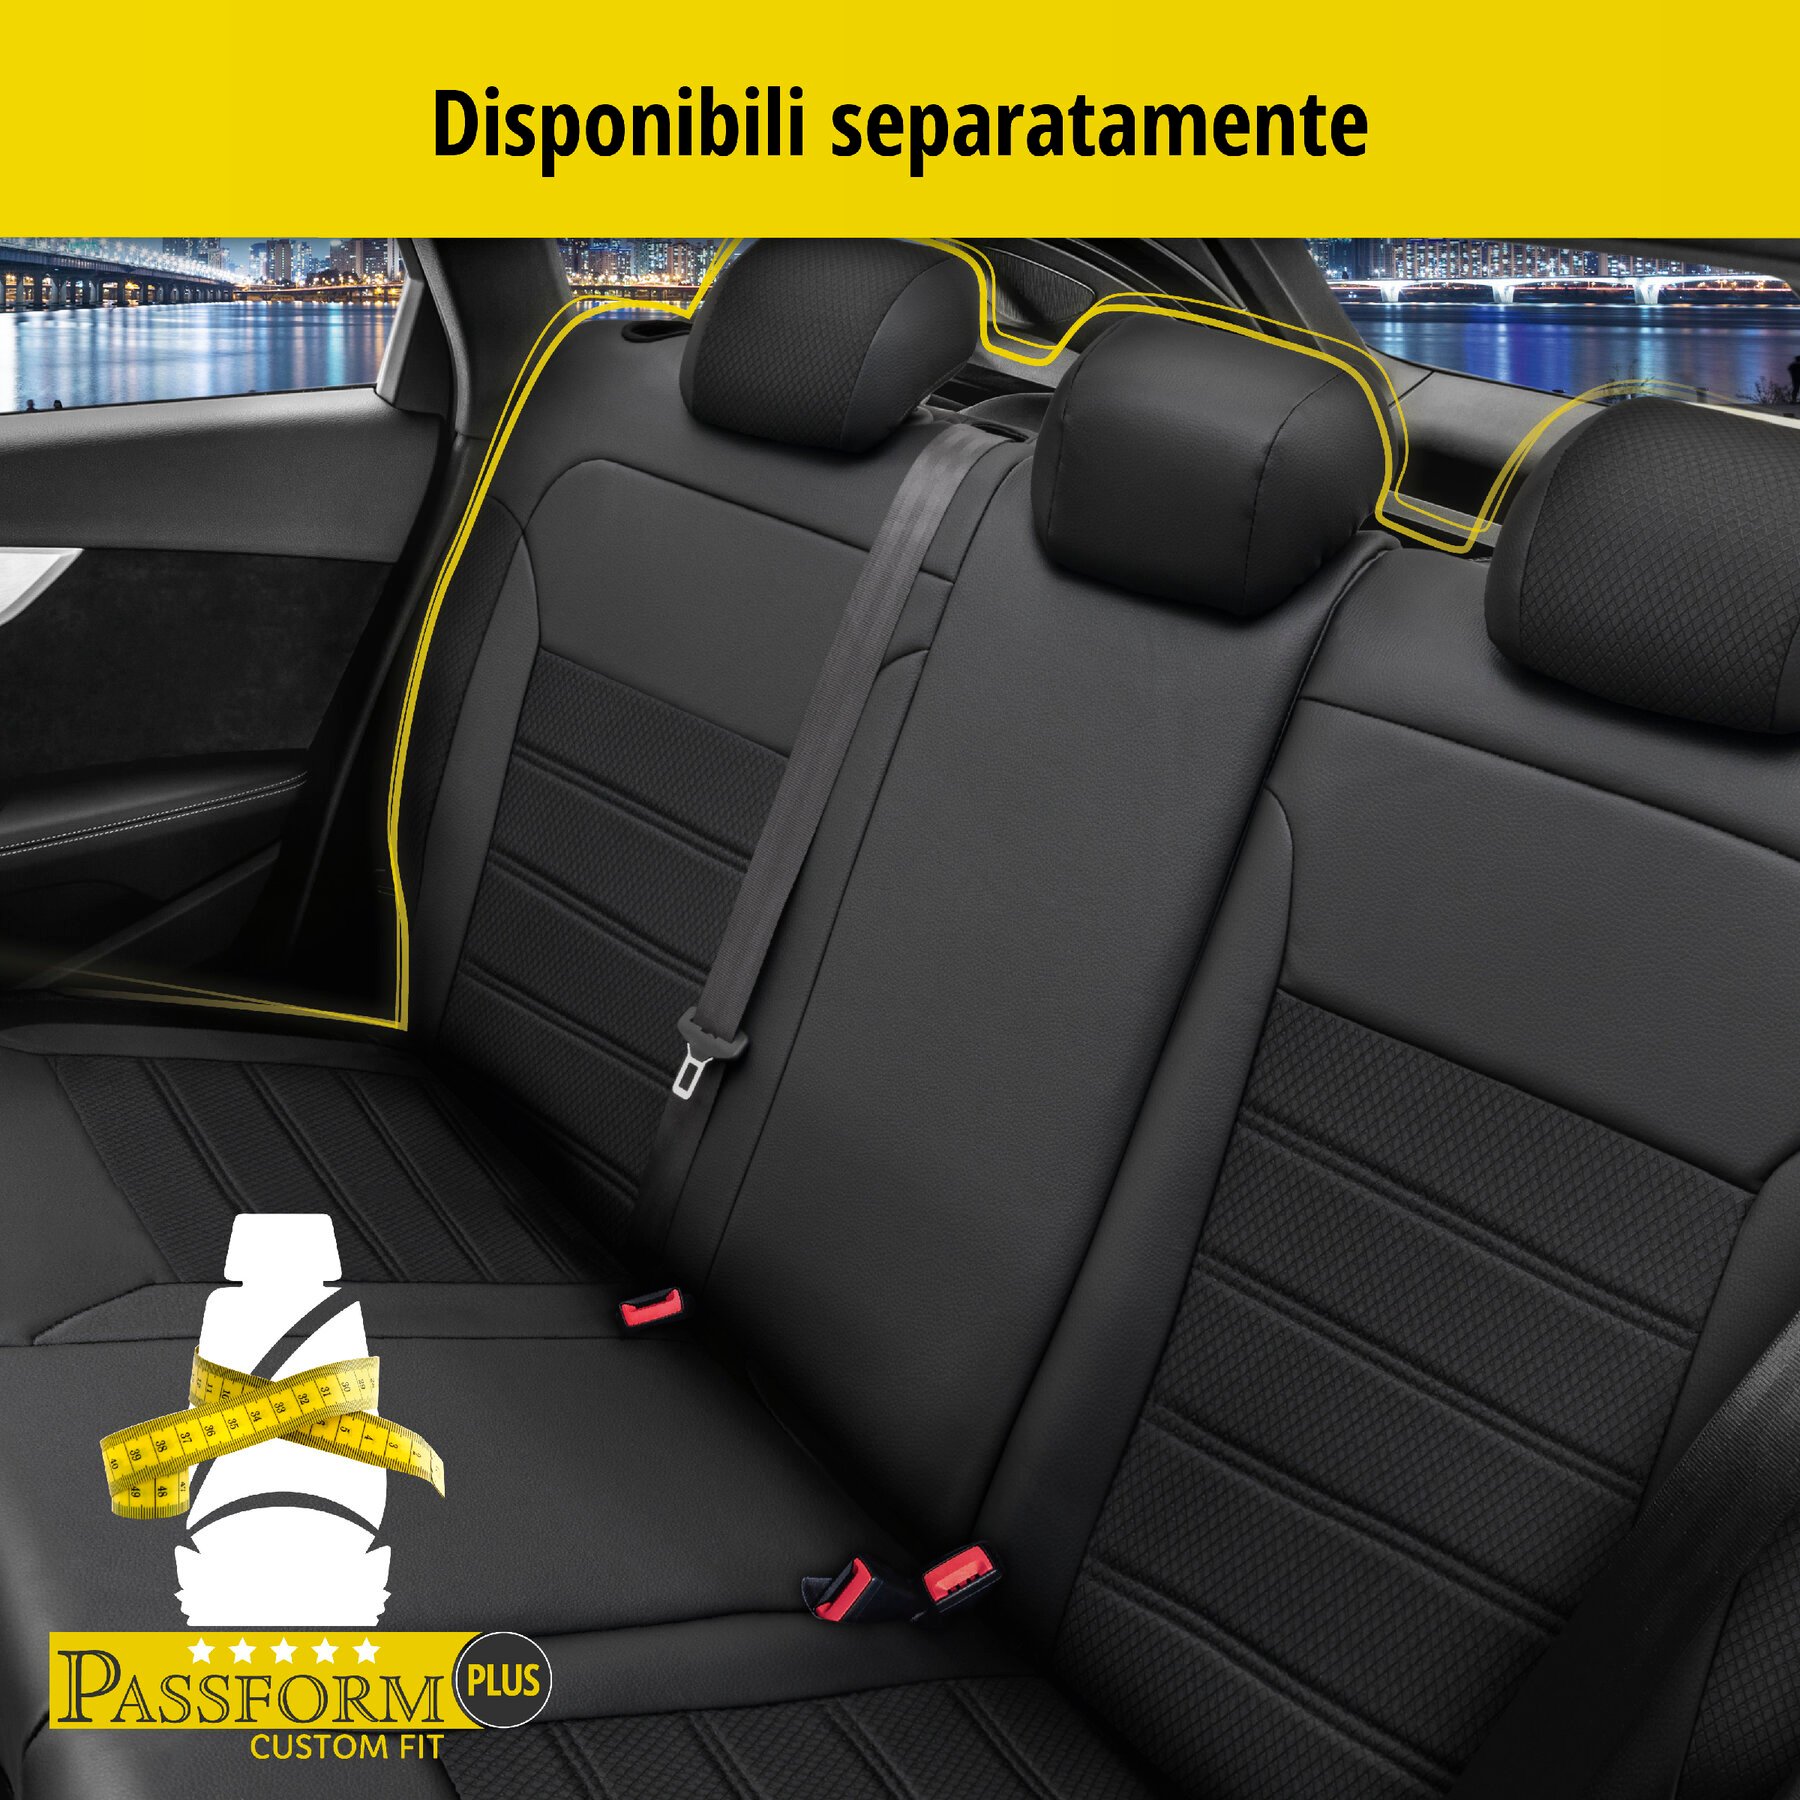 Coprisedili Aversa per VW Caddy III Combi 2KB,2KJ,2CB 03/2004-05/2015, 2 coprisedili per sedili normali